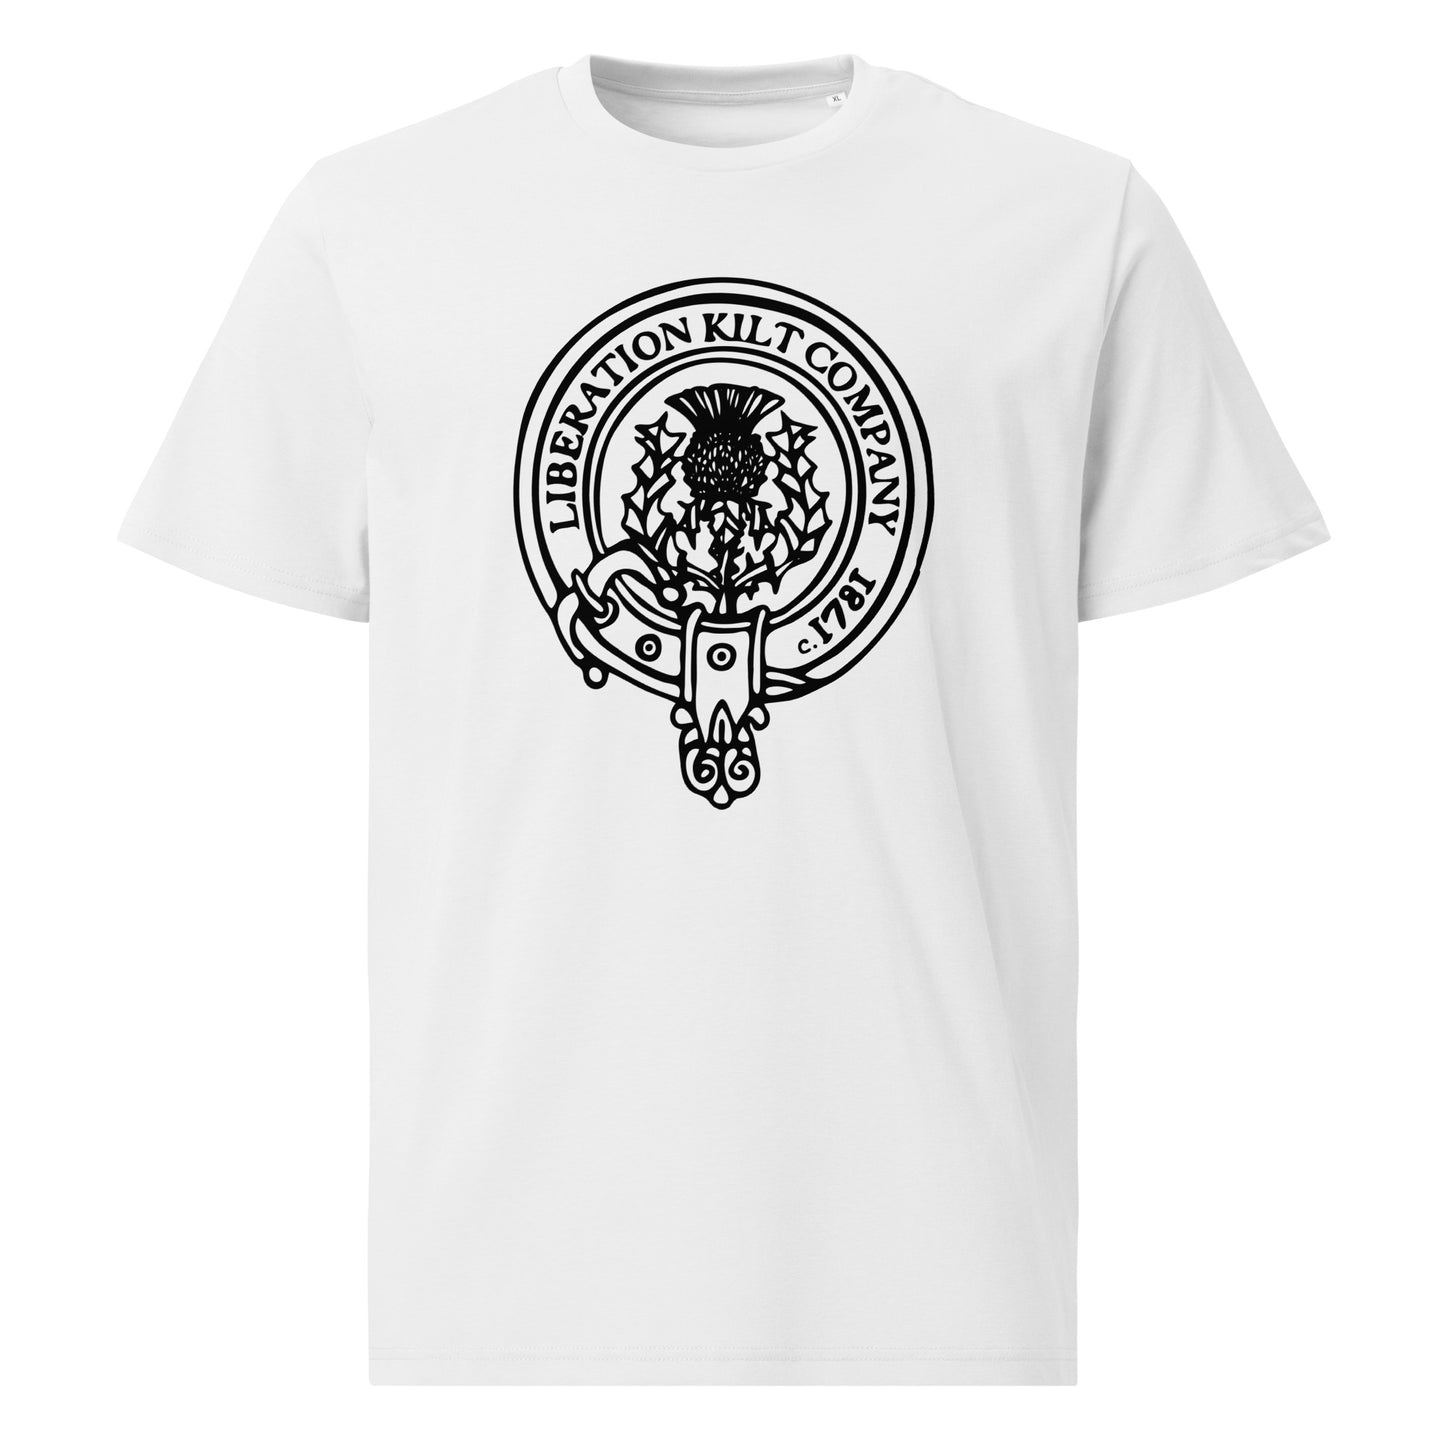 LIBERATION KILT White/Khaki Unisex T-Shirt Black Print